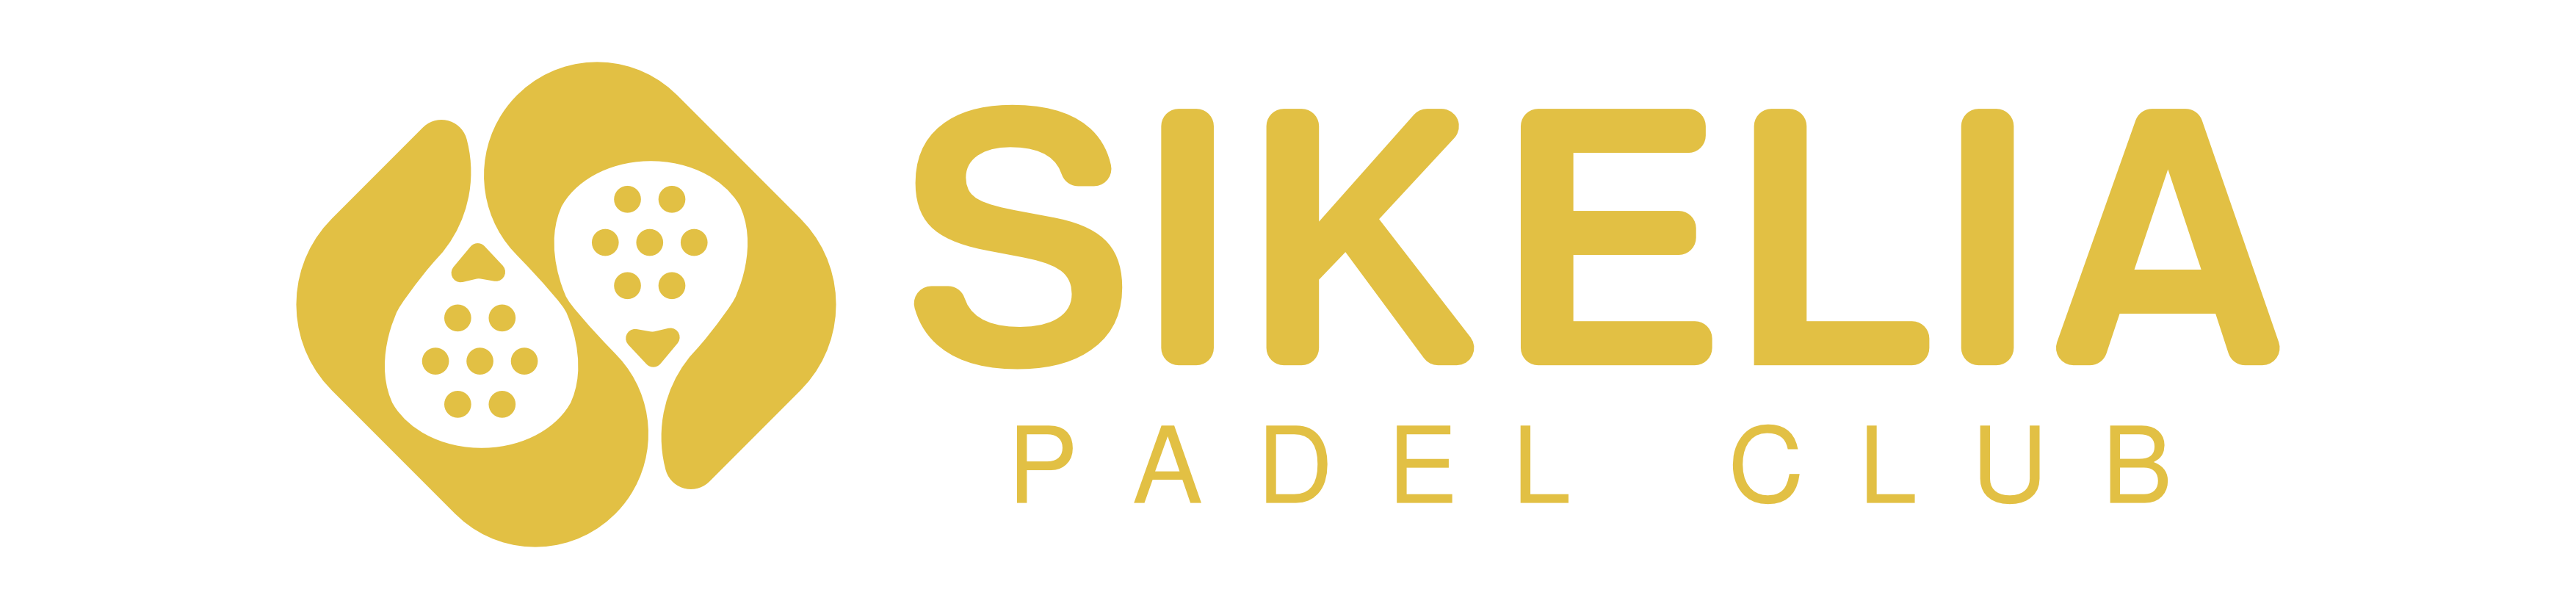 Sikelia Padel Club